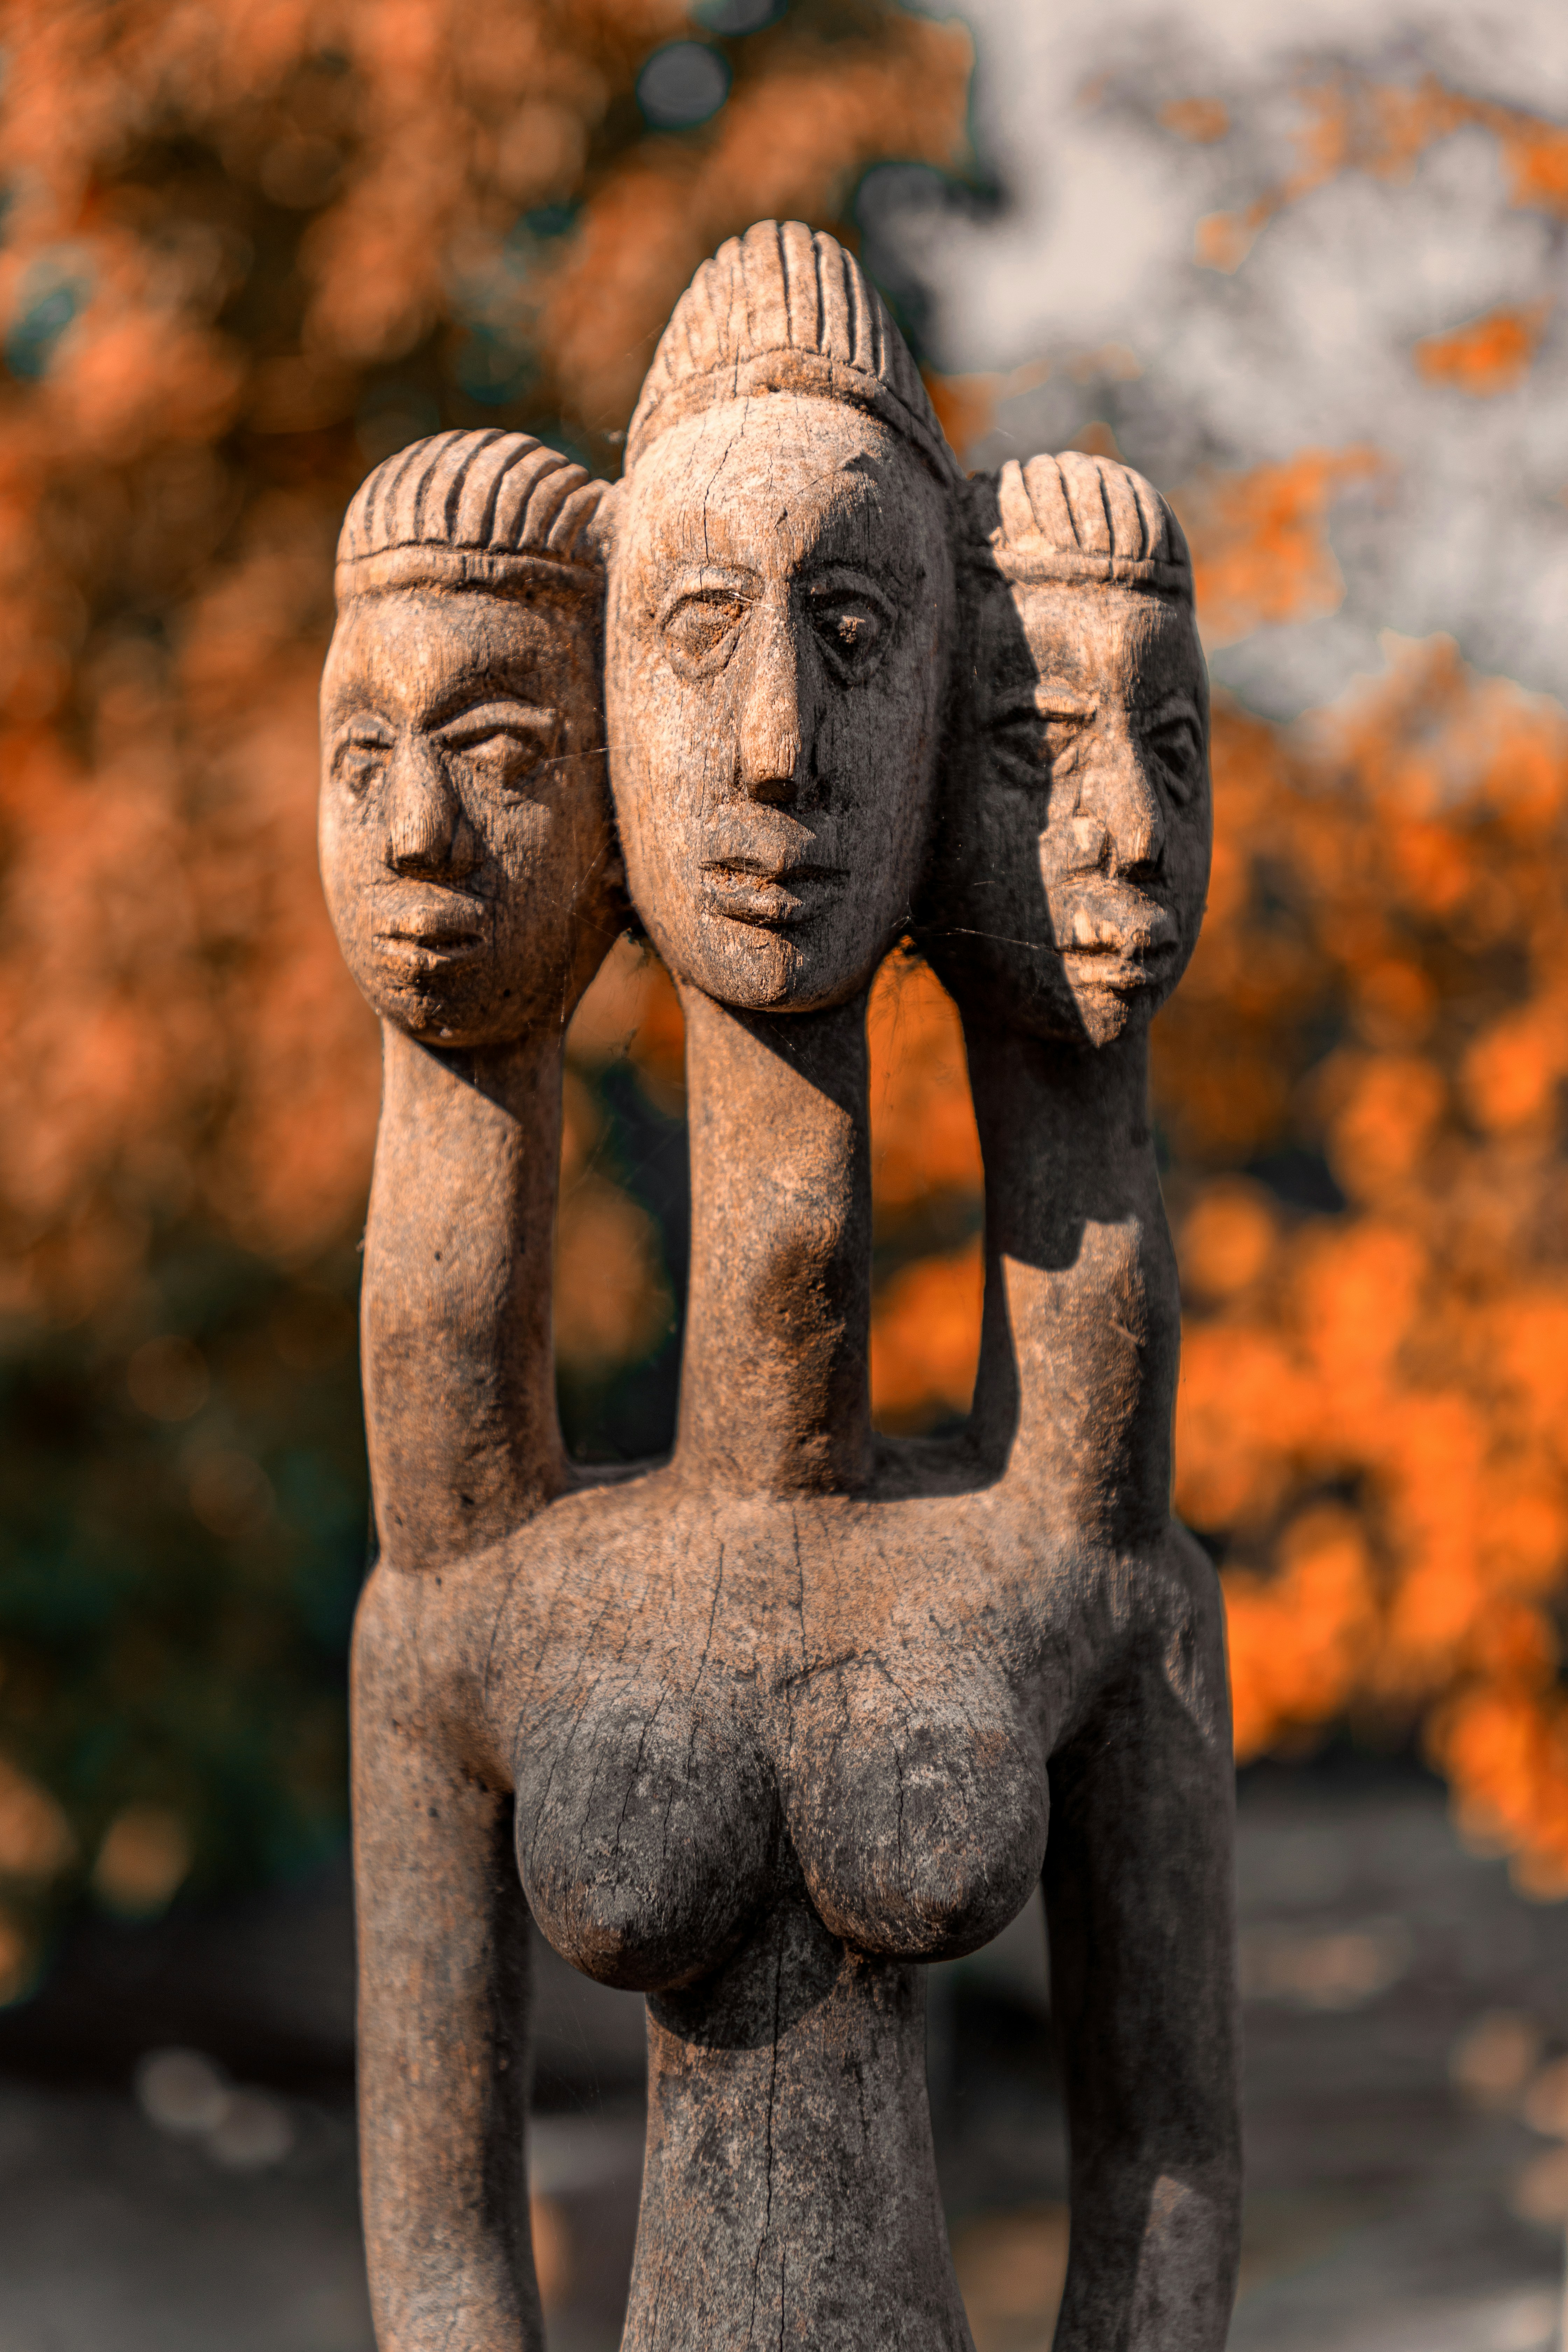 Three headed statue